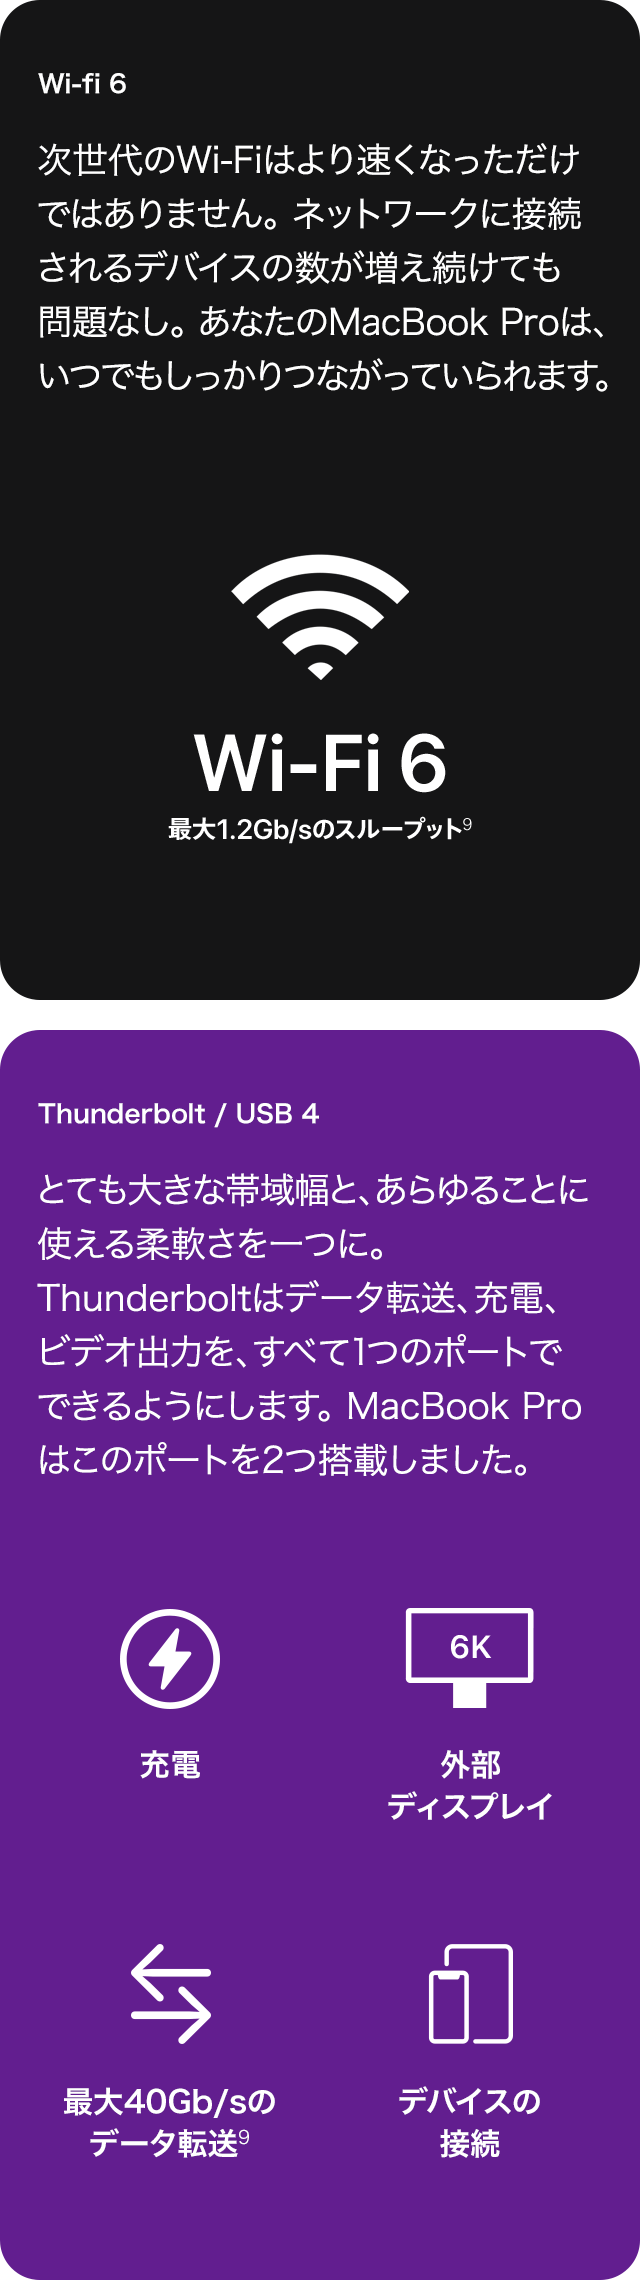 Wi-Fi 6/ Thunderbolt/ USB 4